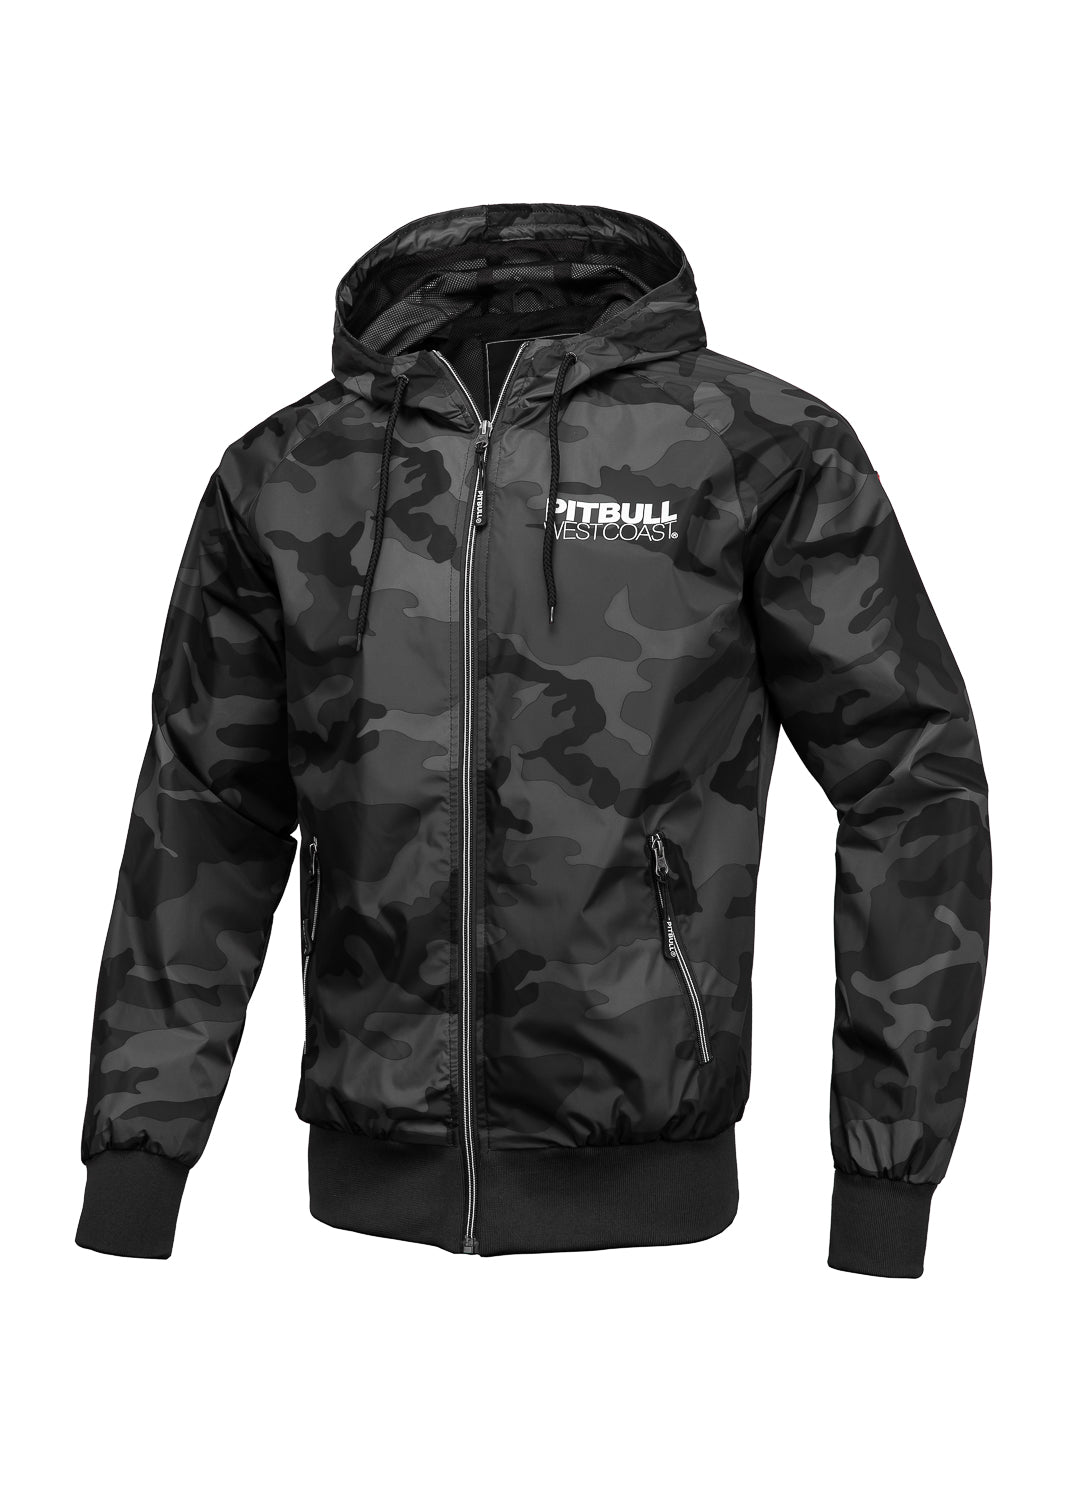 ATHLETIC Jacket All Black Camo - Pitbull West Coast International Store 